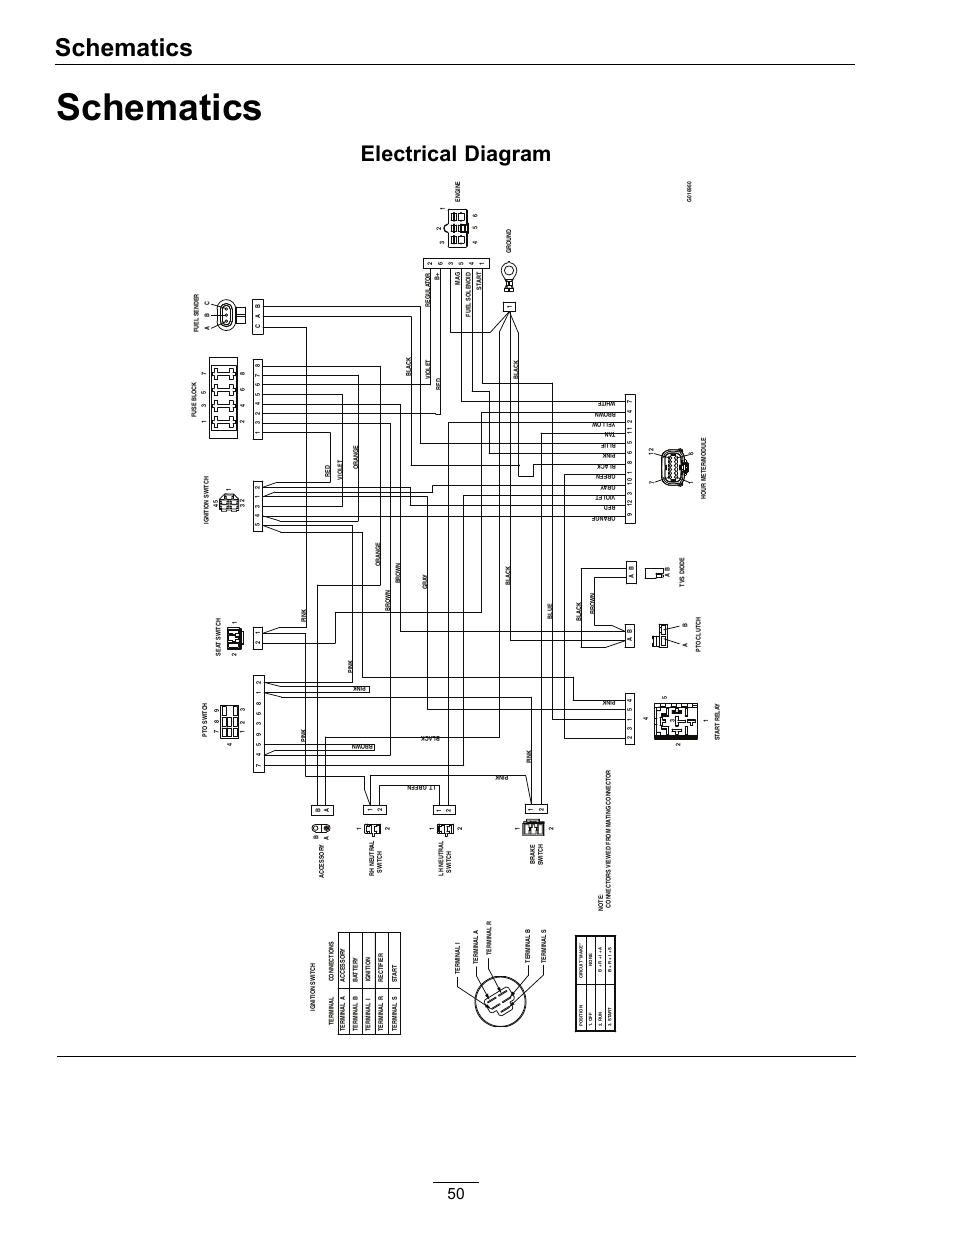 cb550 wiring diagram interactive